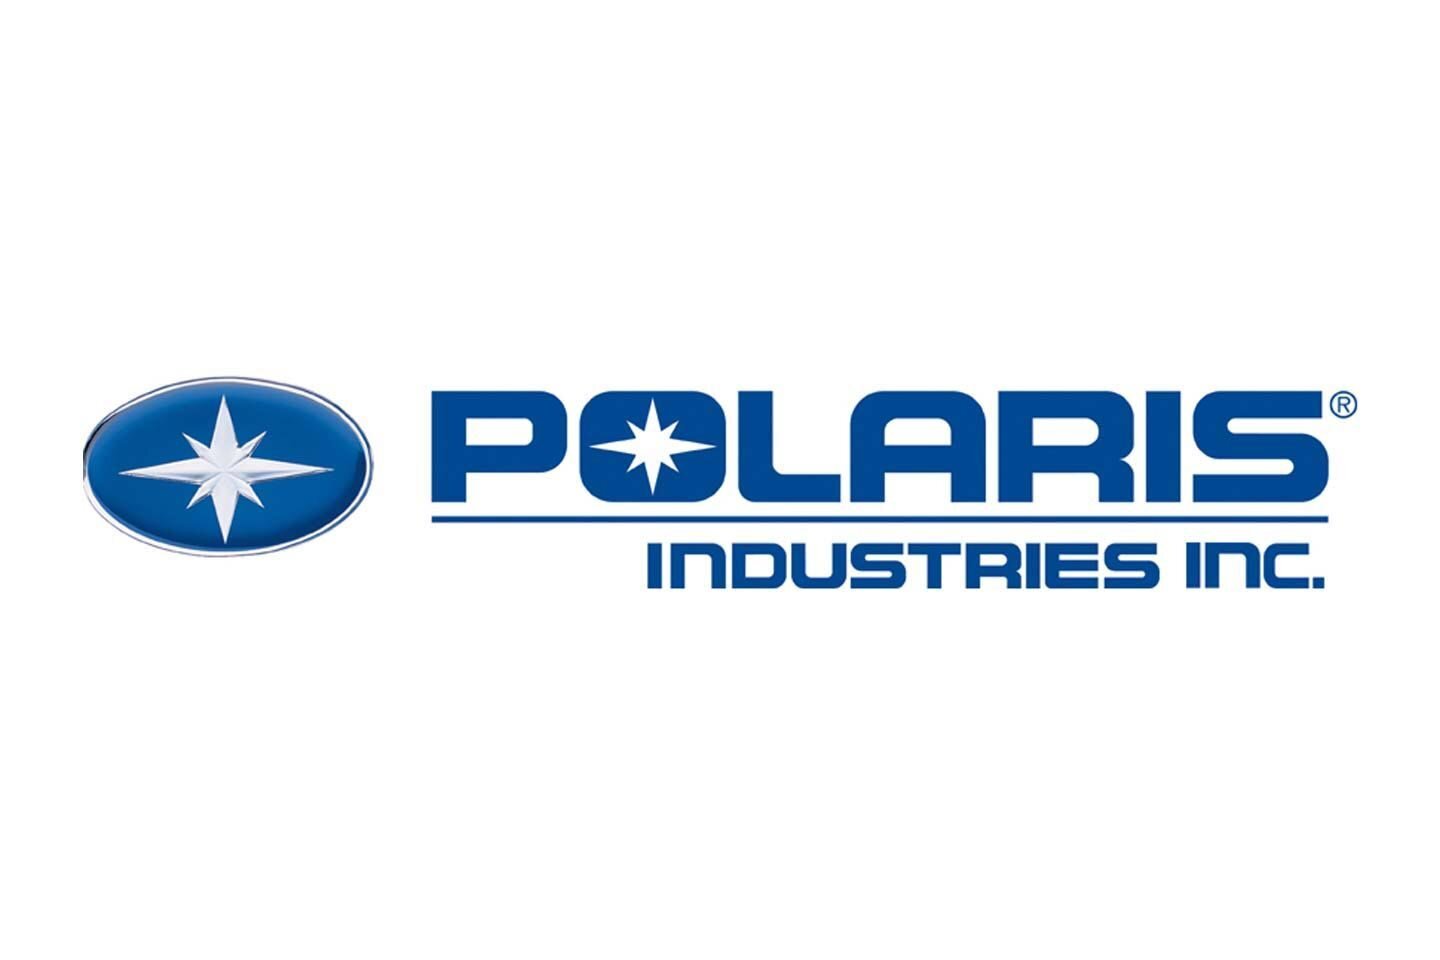 polaris-industries-logo.jpg